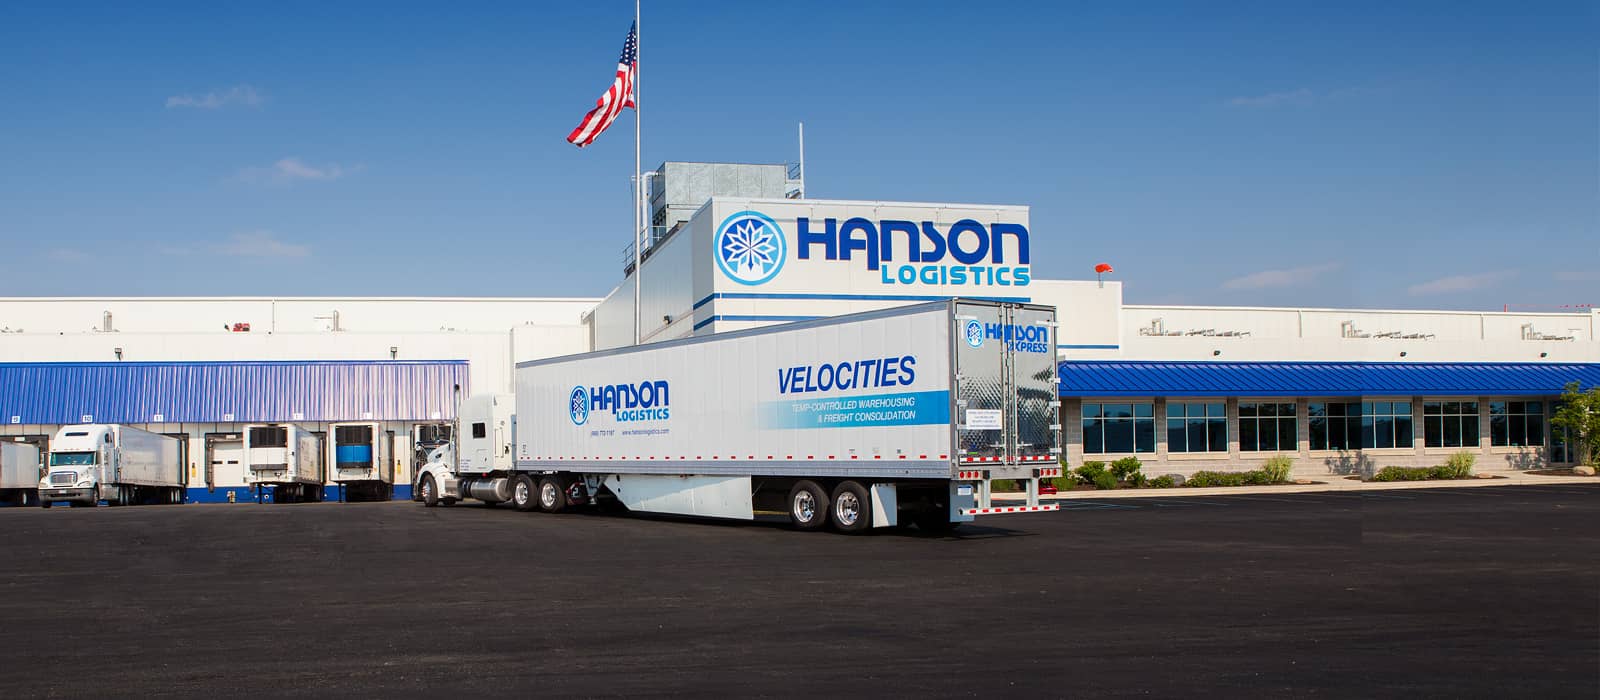 hanson_truck_d_flat_hero-mobile-12